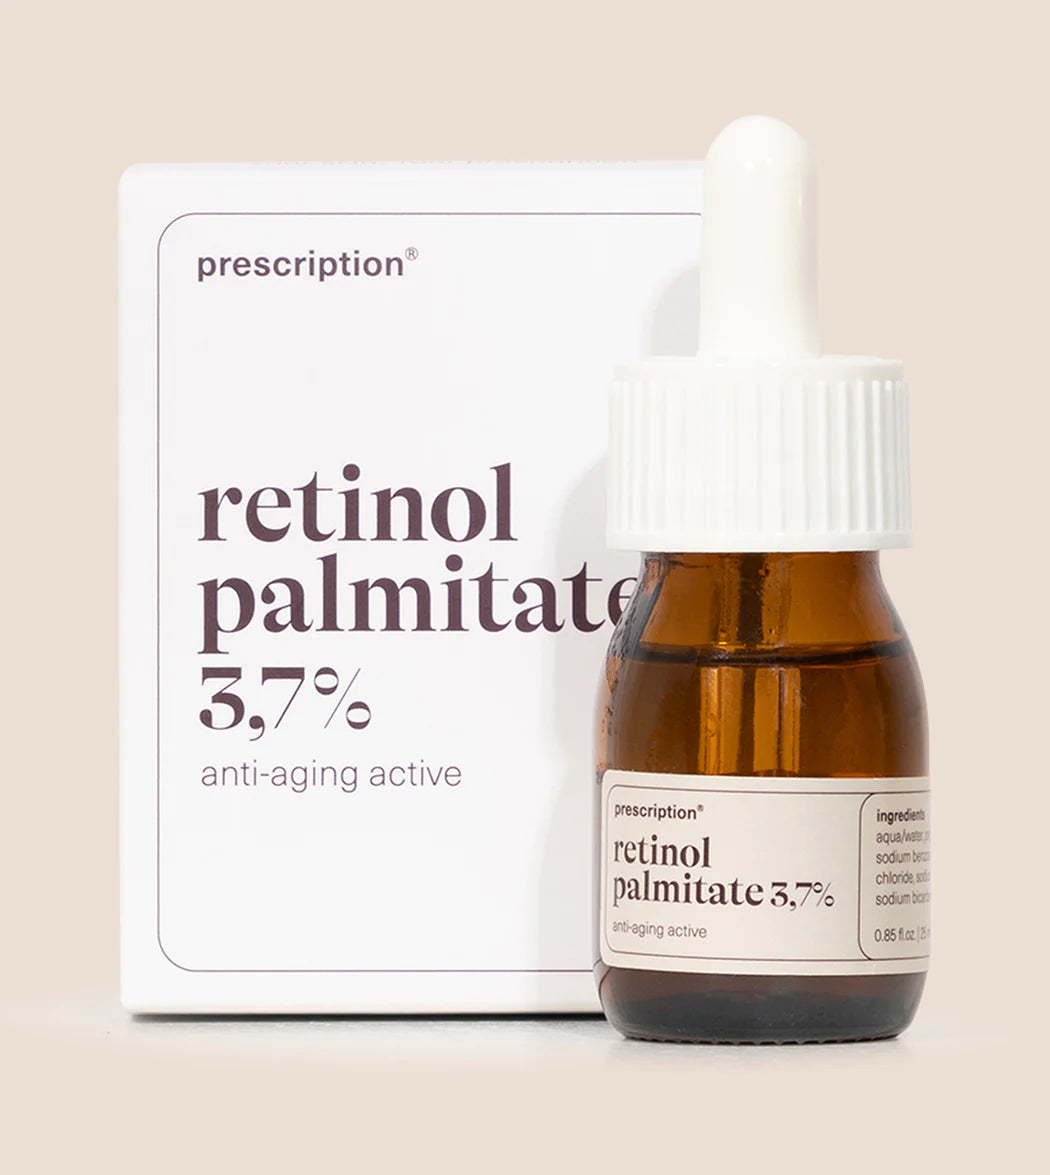 Prescription - retinol palmitate 3.7%